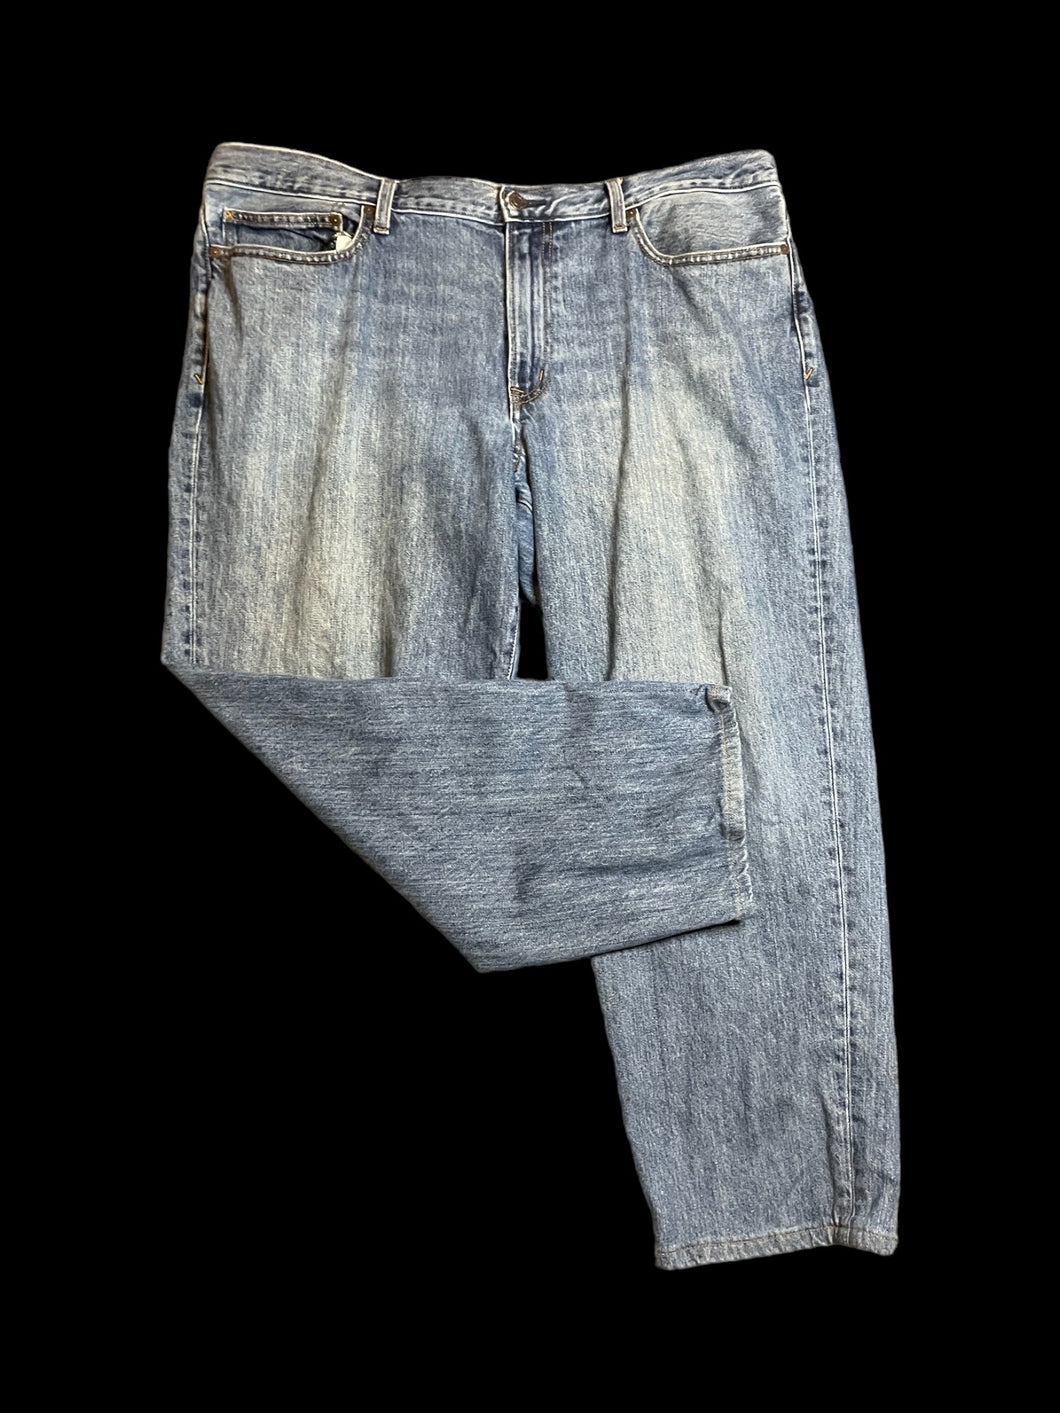 0X Blue denim pants w/ pockets, belt loops, & button/zipper closure